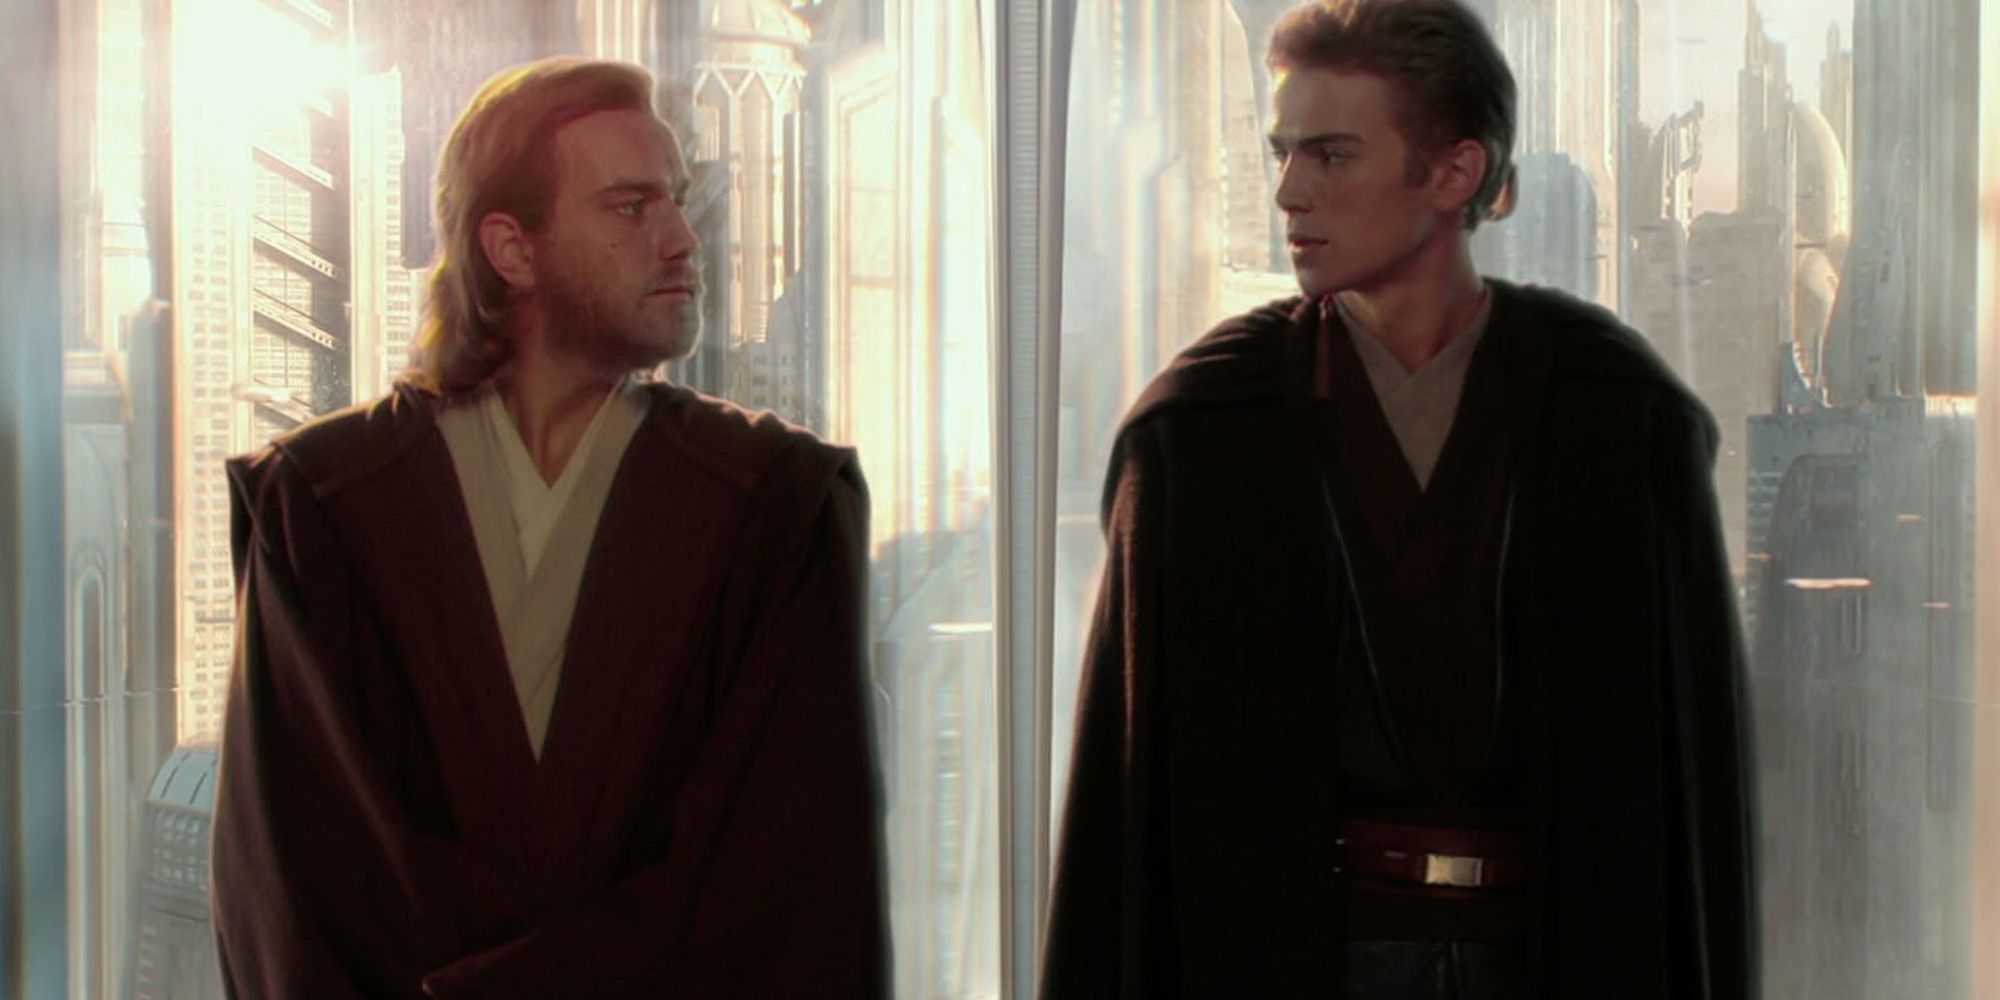 Obi-Wan Kenobi And Anakin Skywalker in Star Wars